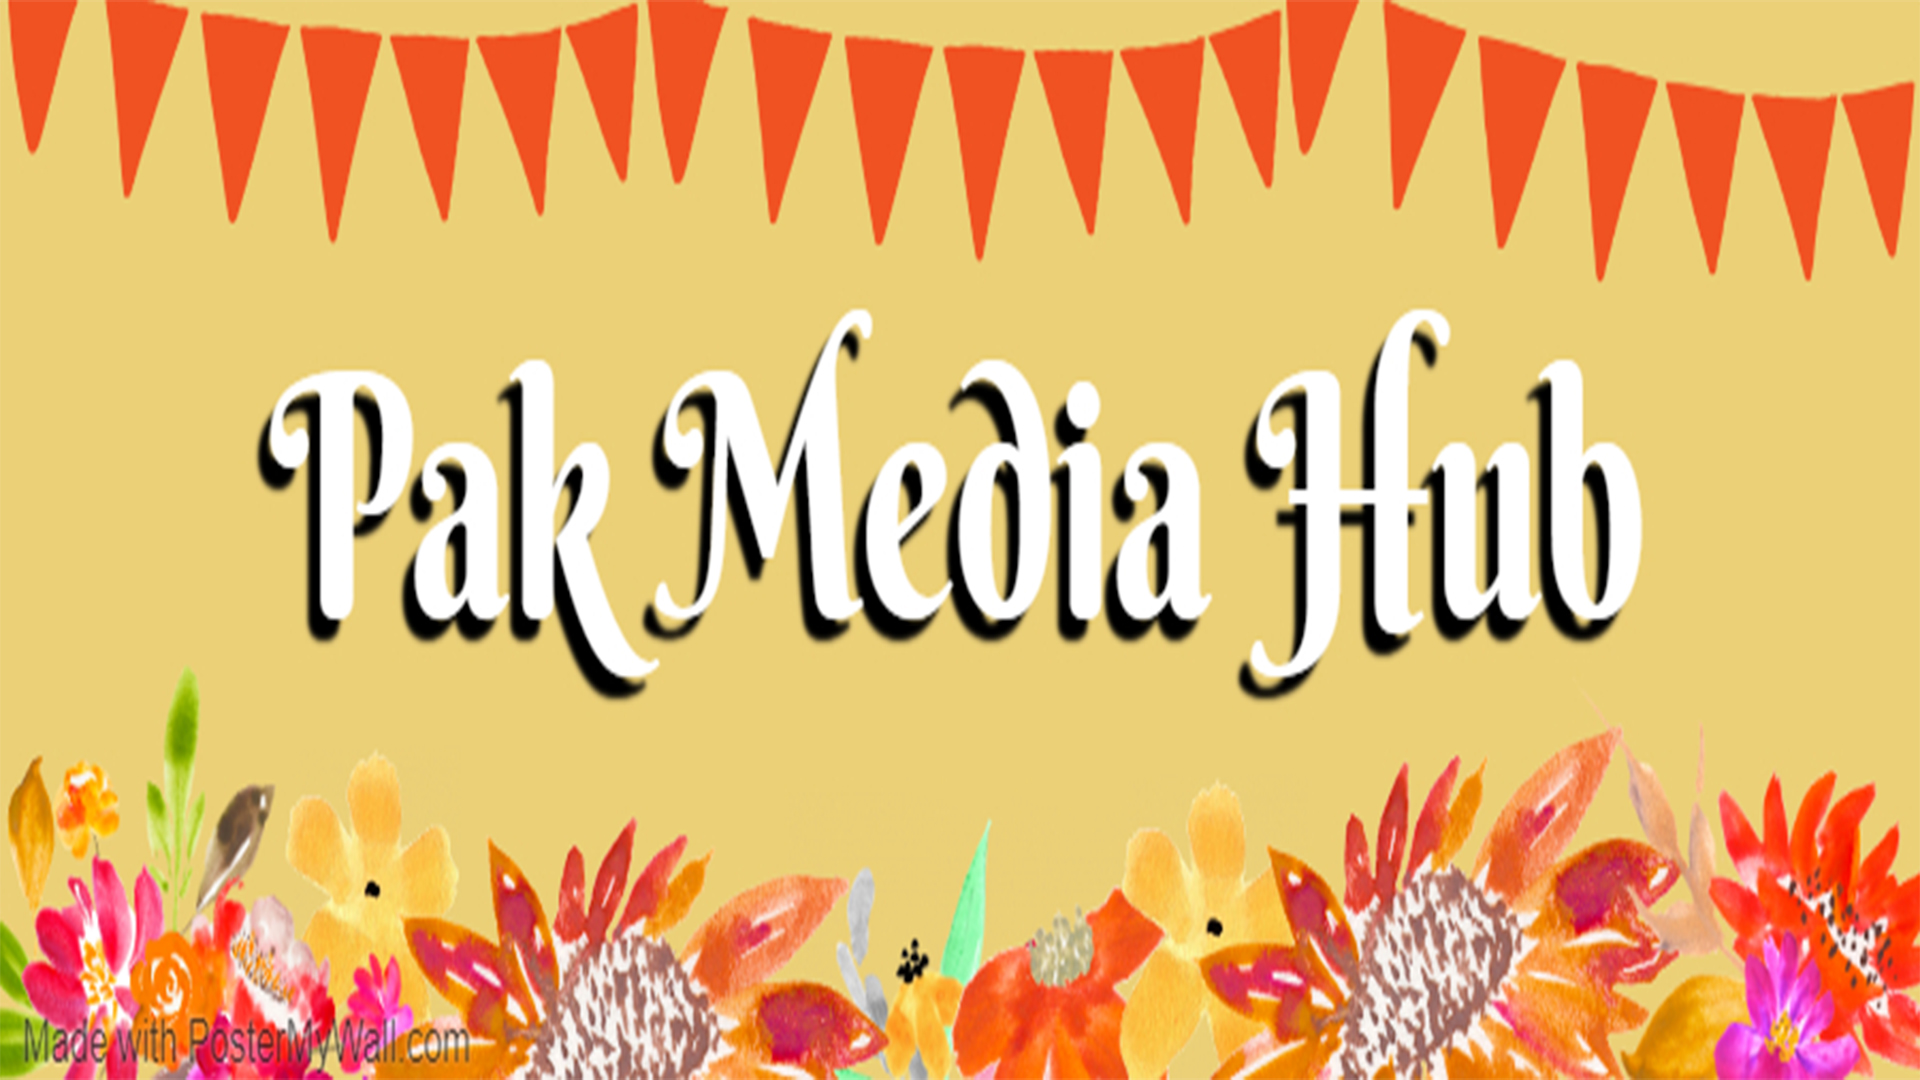 Pak Media Hub